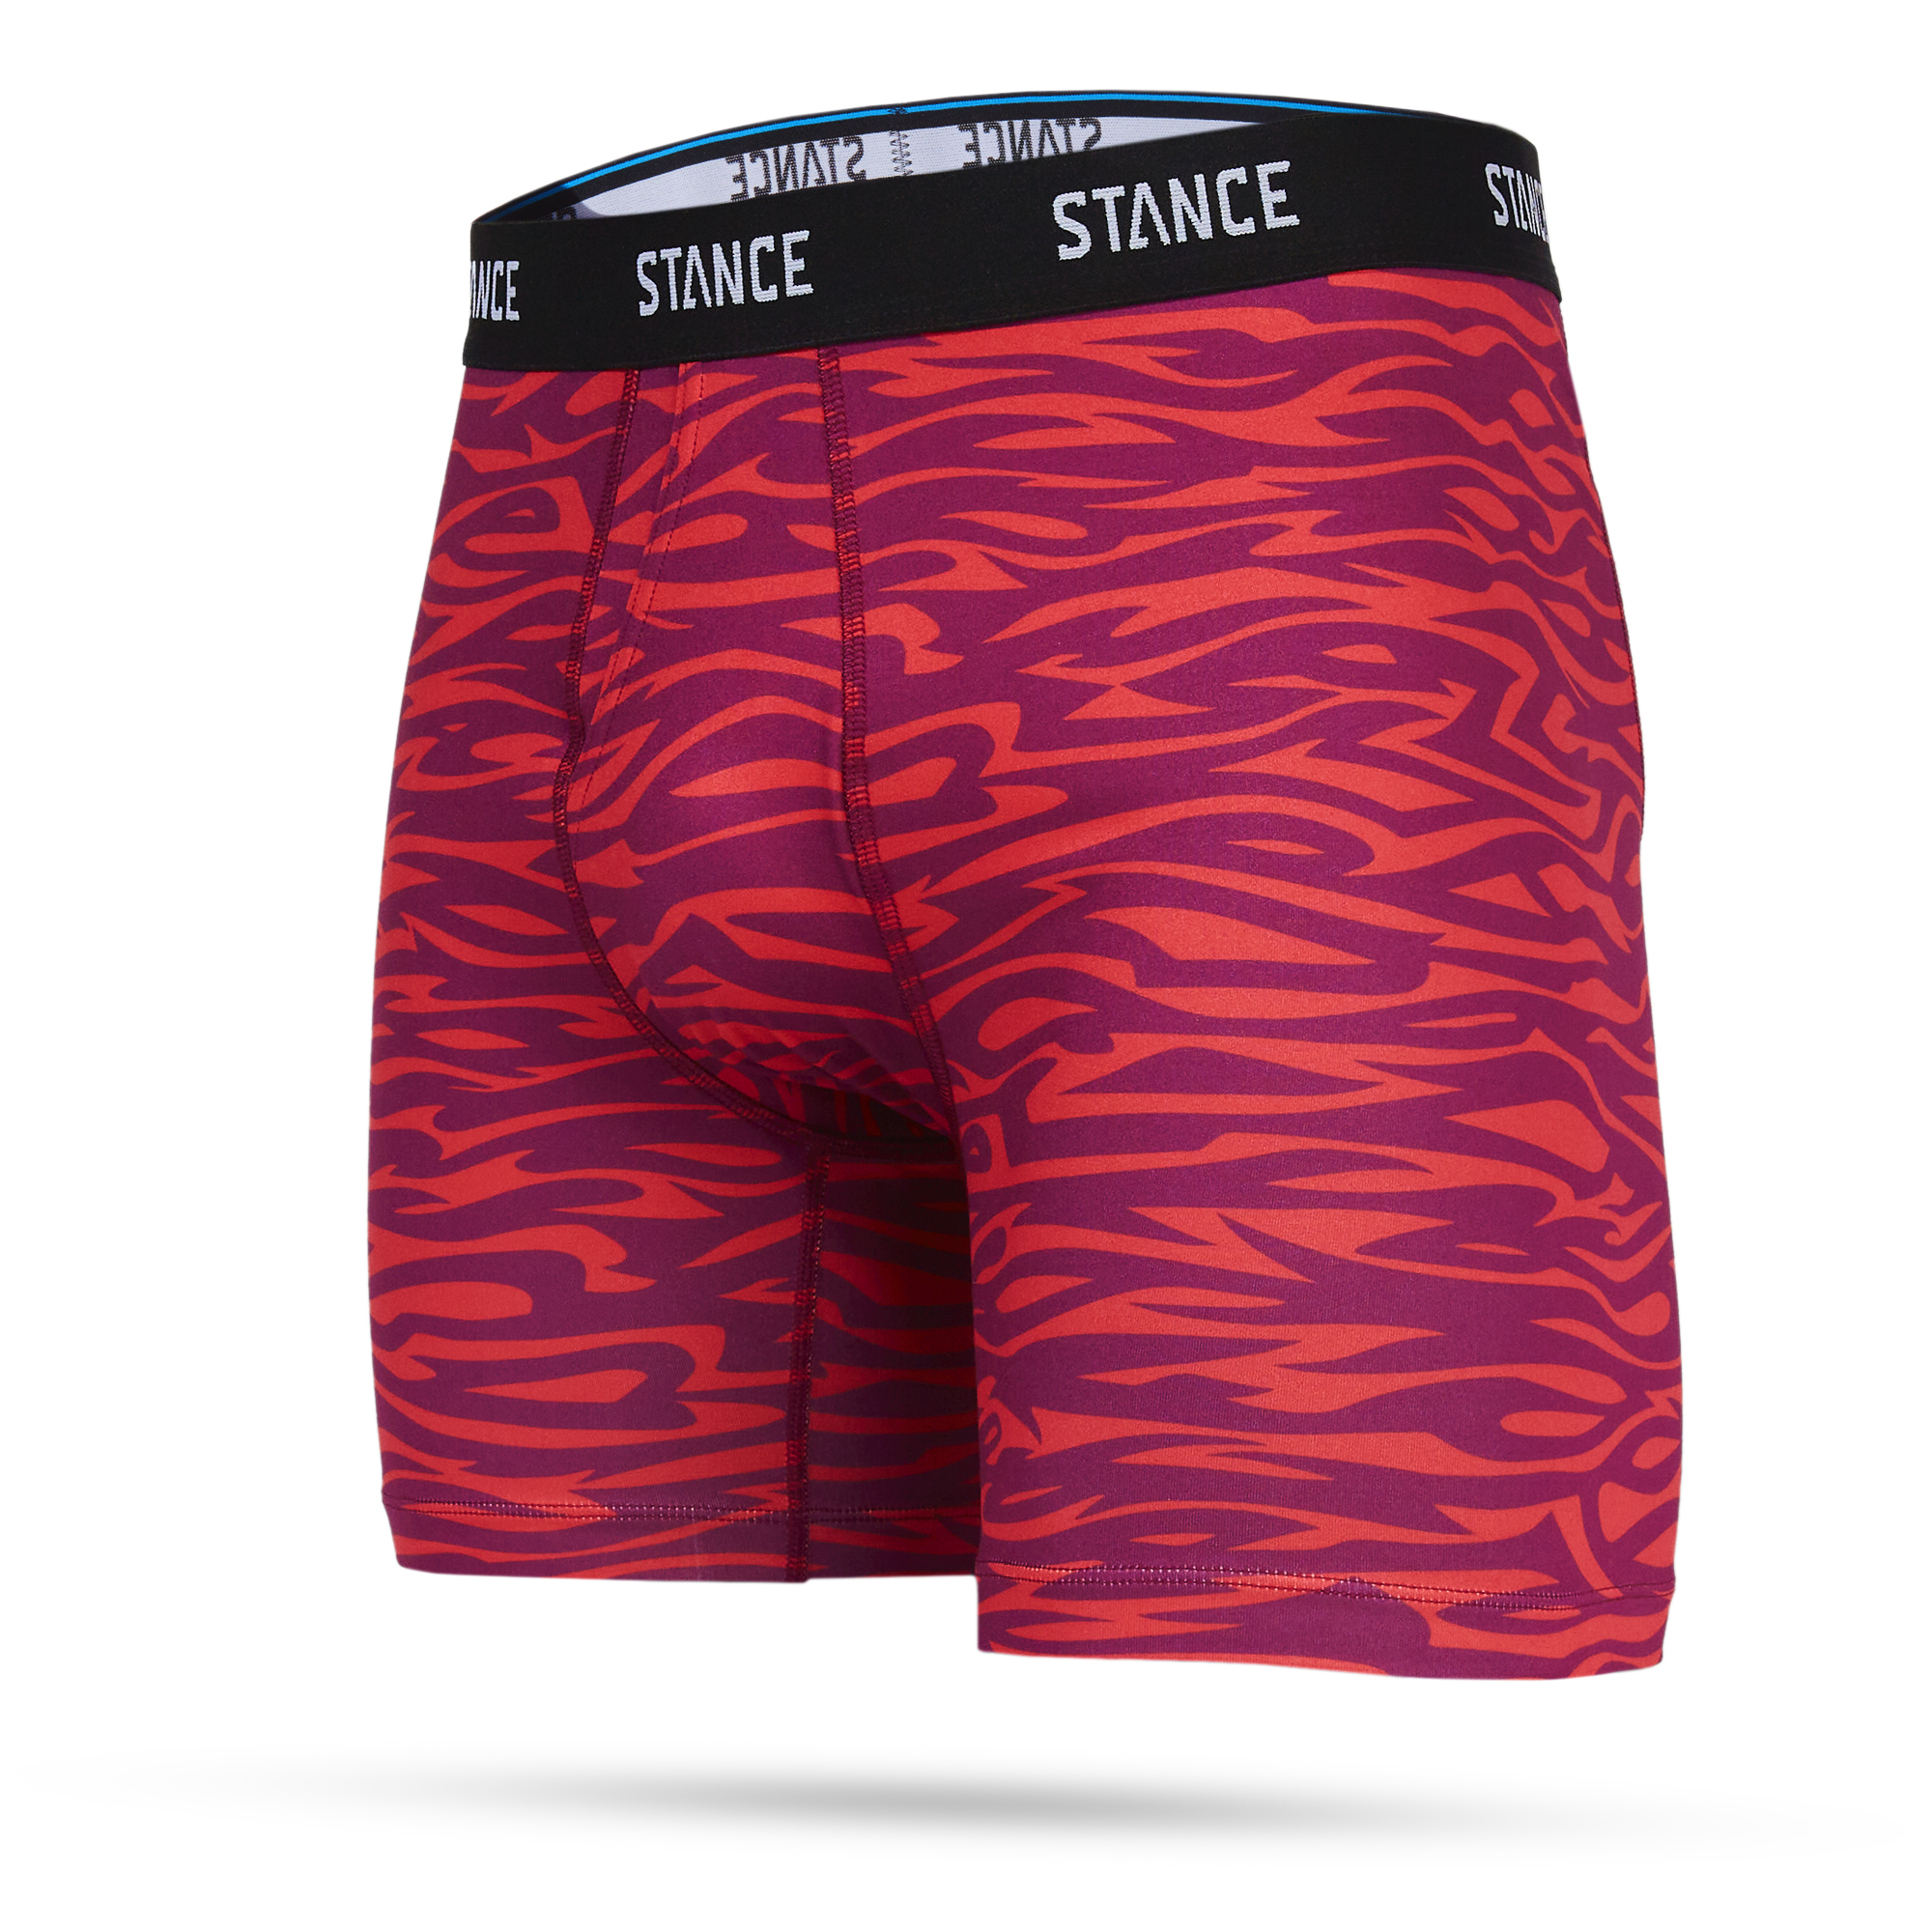 STANCE Feel 360 Boxer Brief Underwear sz 2XL XX-Large (43-46) Marbella Peach